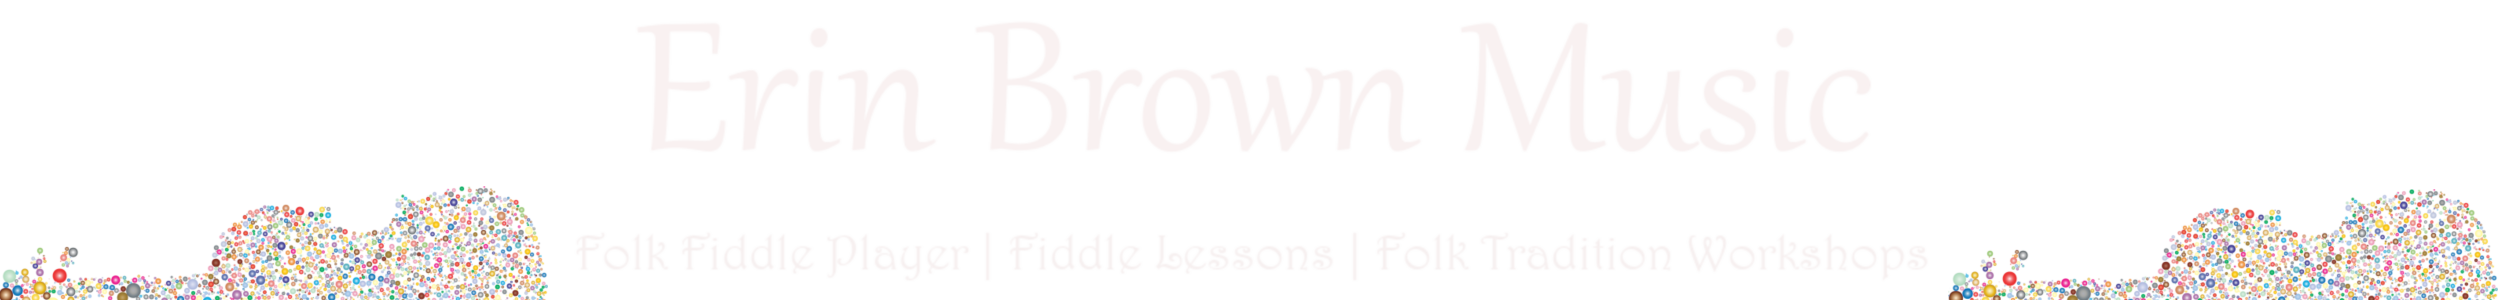 Erin Brown Music Logo